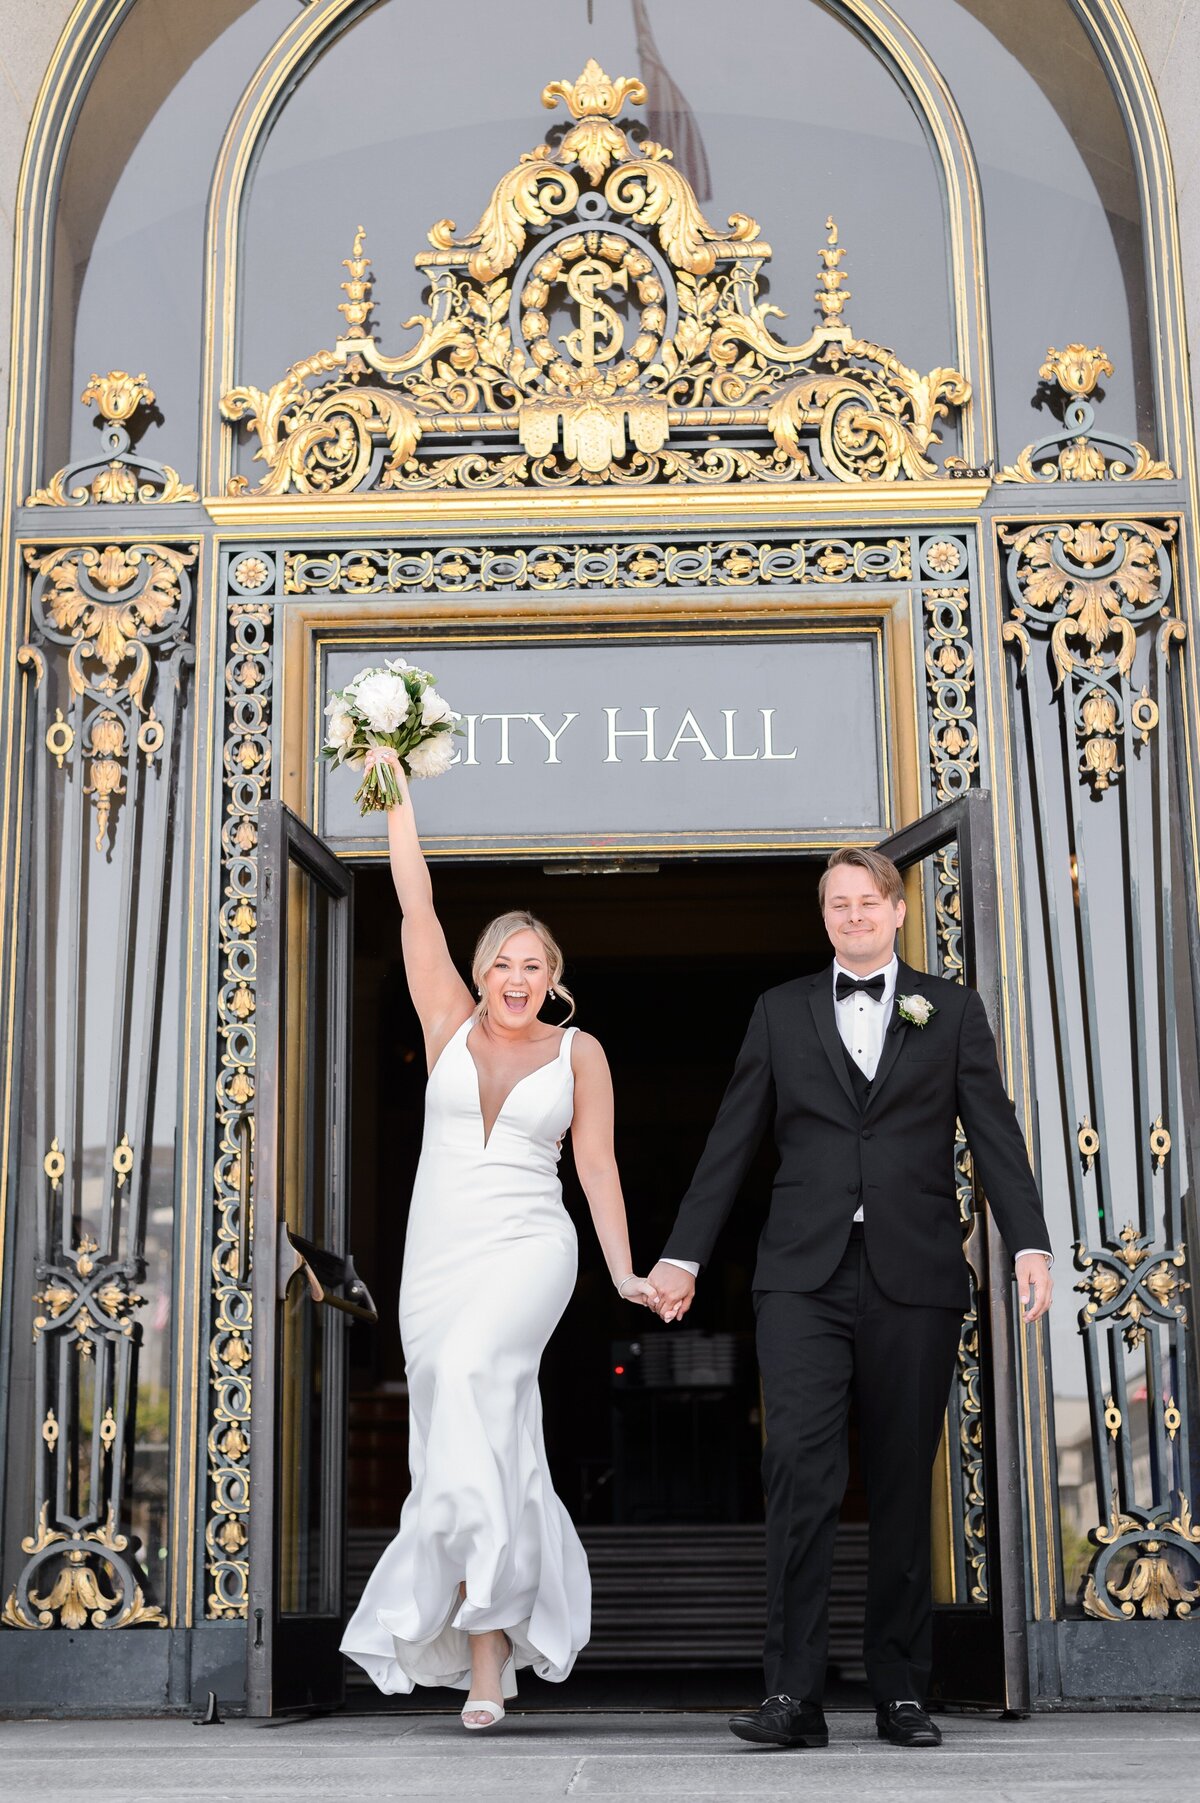 San Francisco Hall City Hall + Destination Wedding Photographer 091